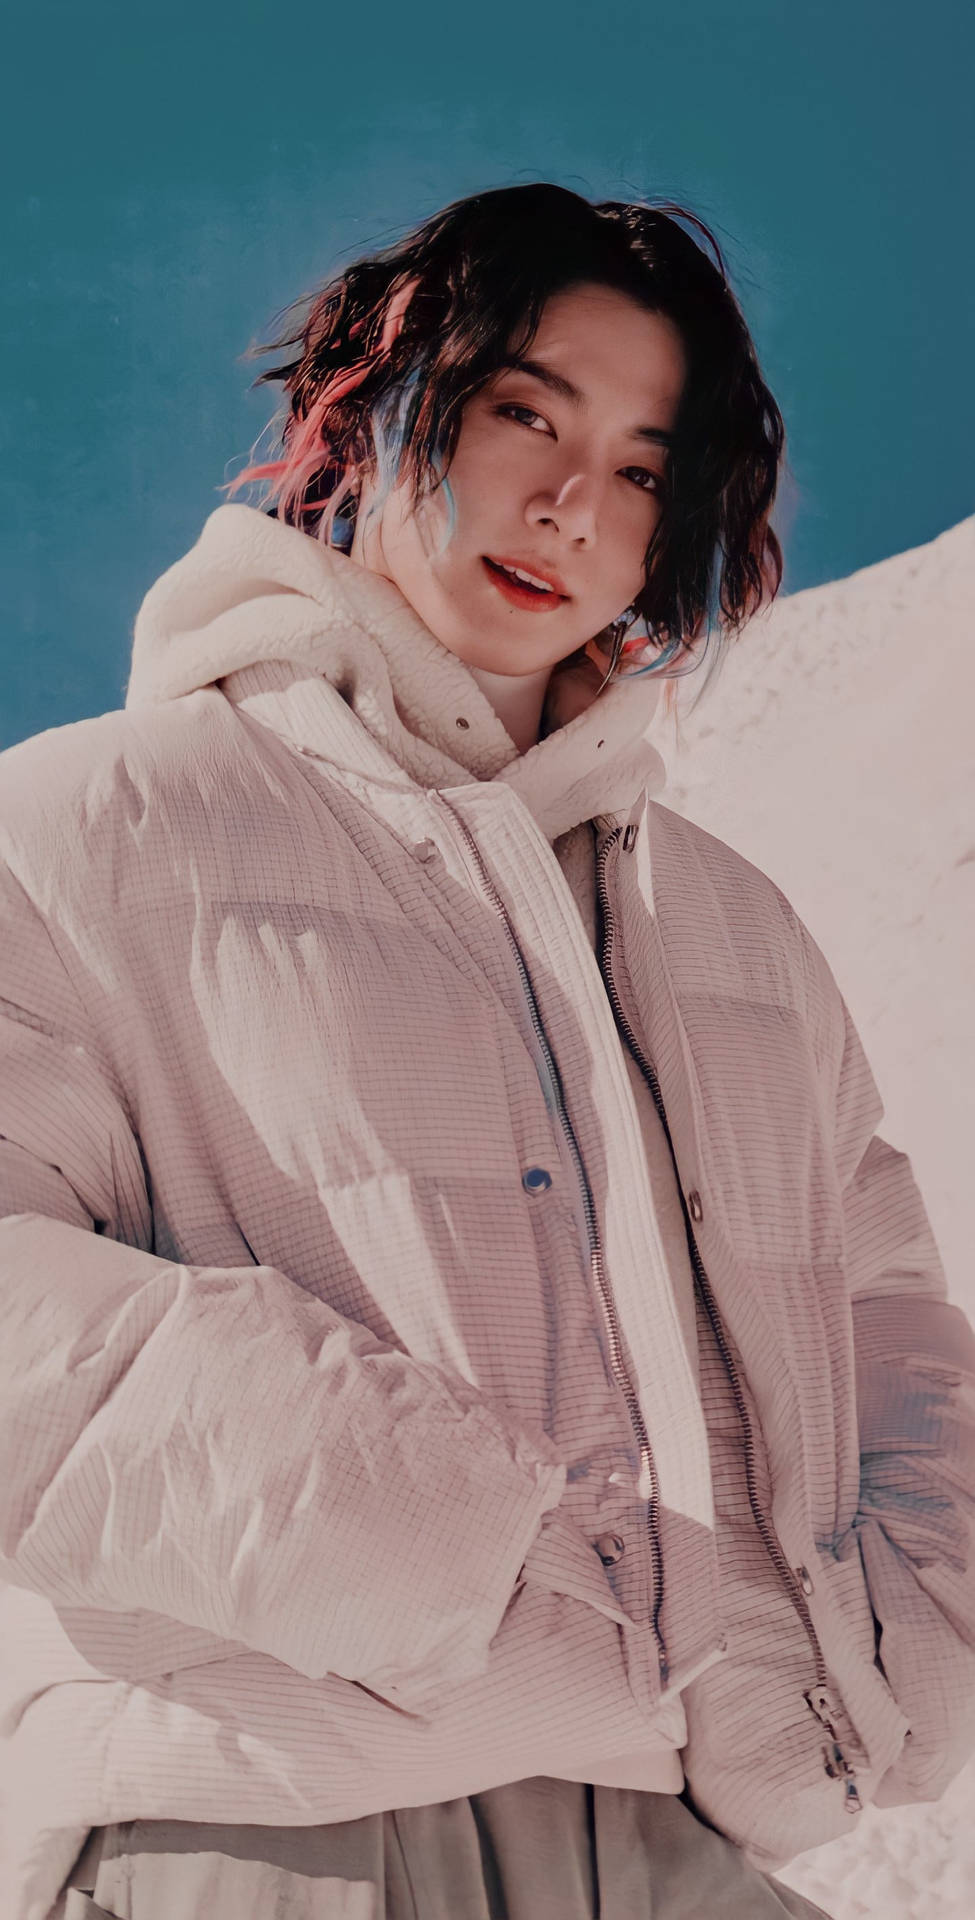 Bts Jung Kook Cute Winter Jacket